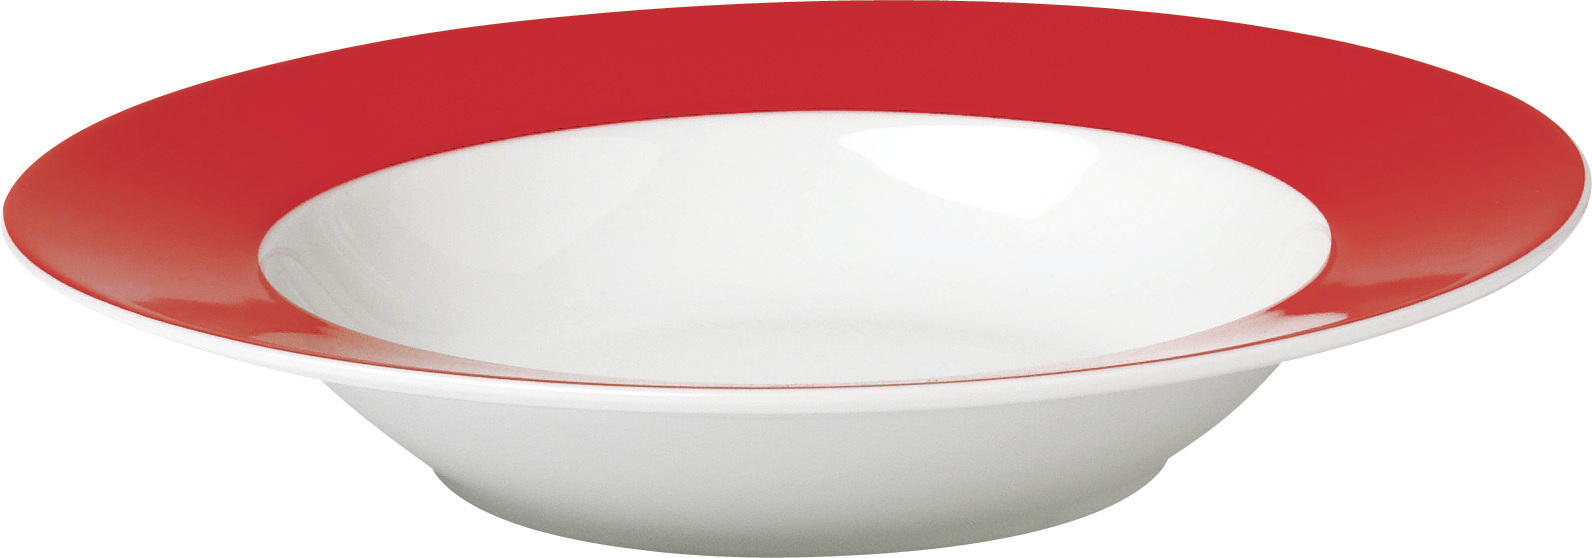 SUPPENTELLERSET VARIO 6-teilig  - Rot/Weiß, Basics, Keramik (21,5cm)